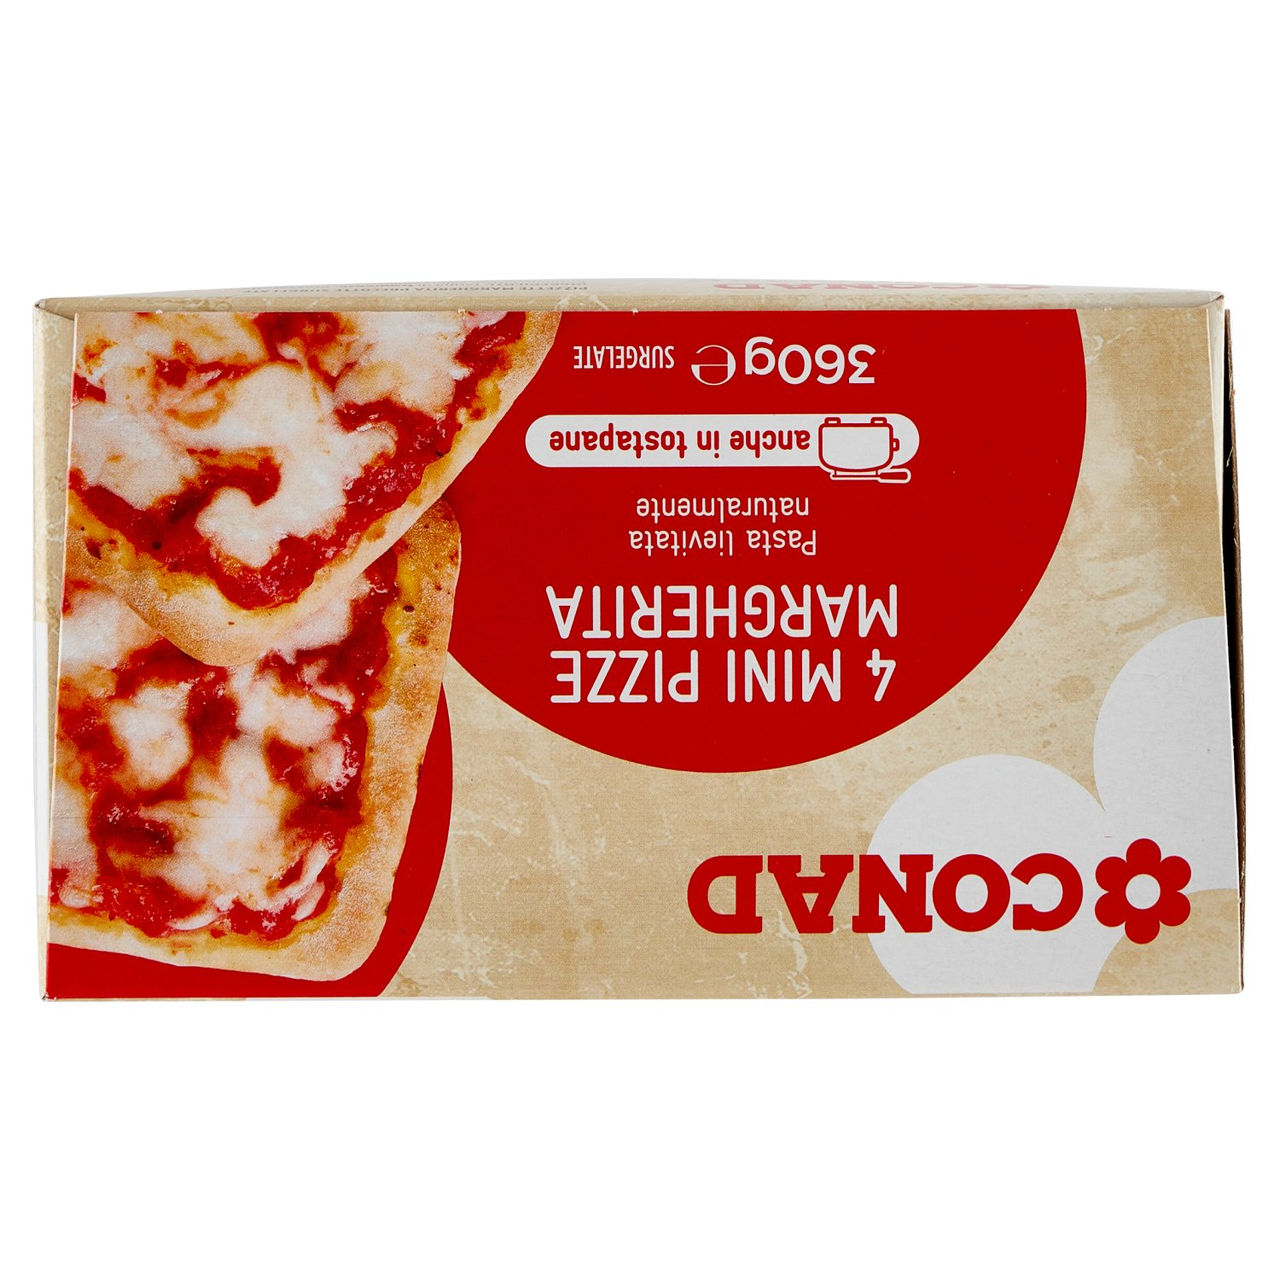 4 Mini Pizze Margherita Conad in vendita online